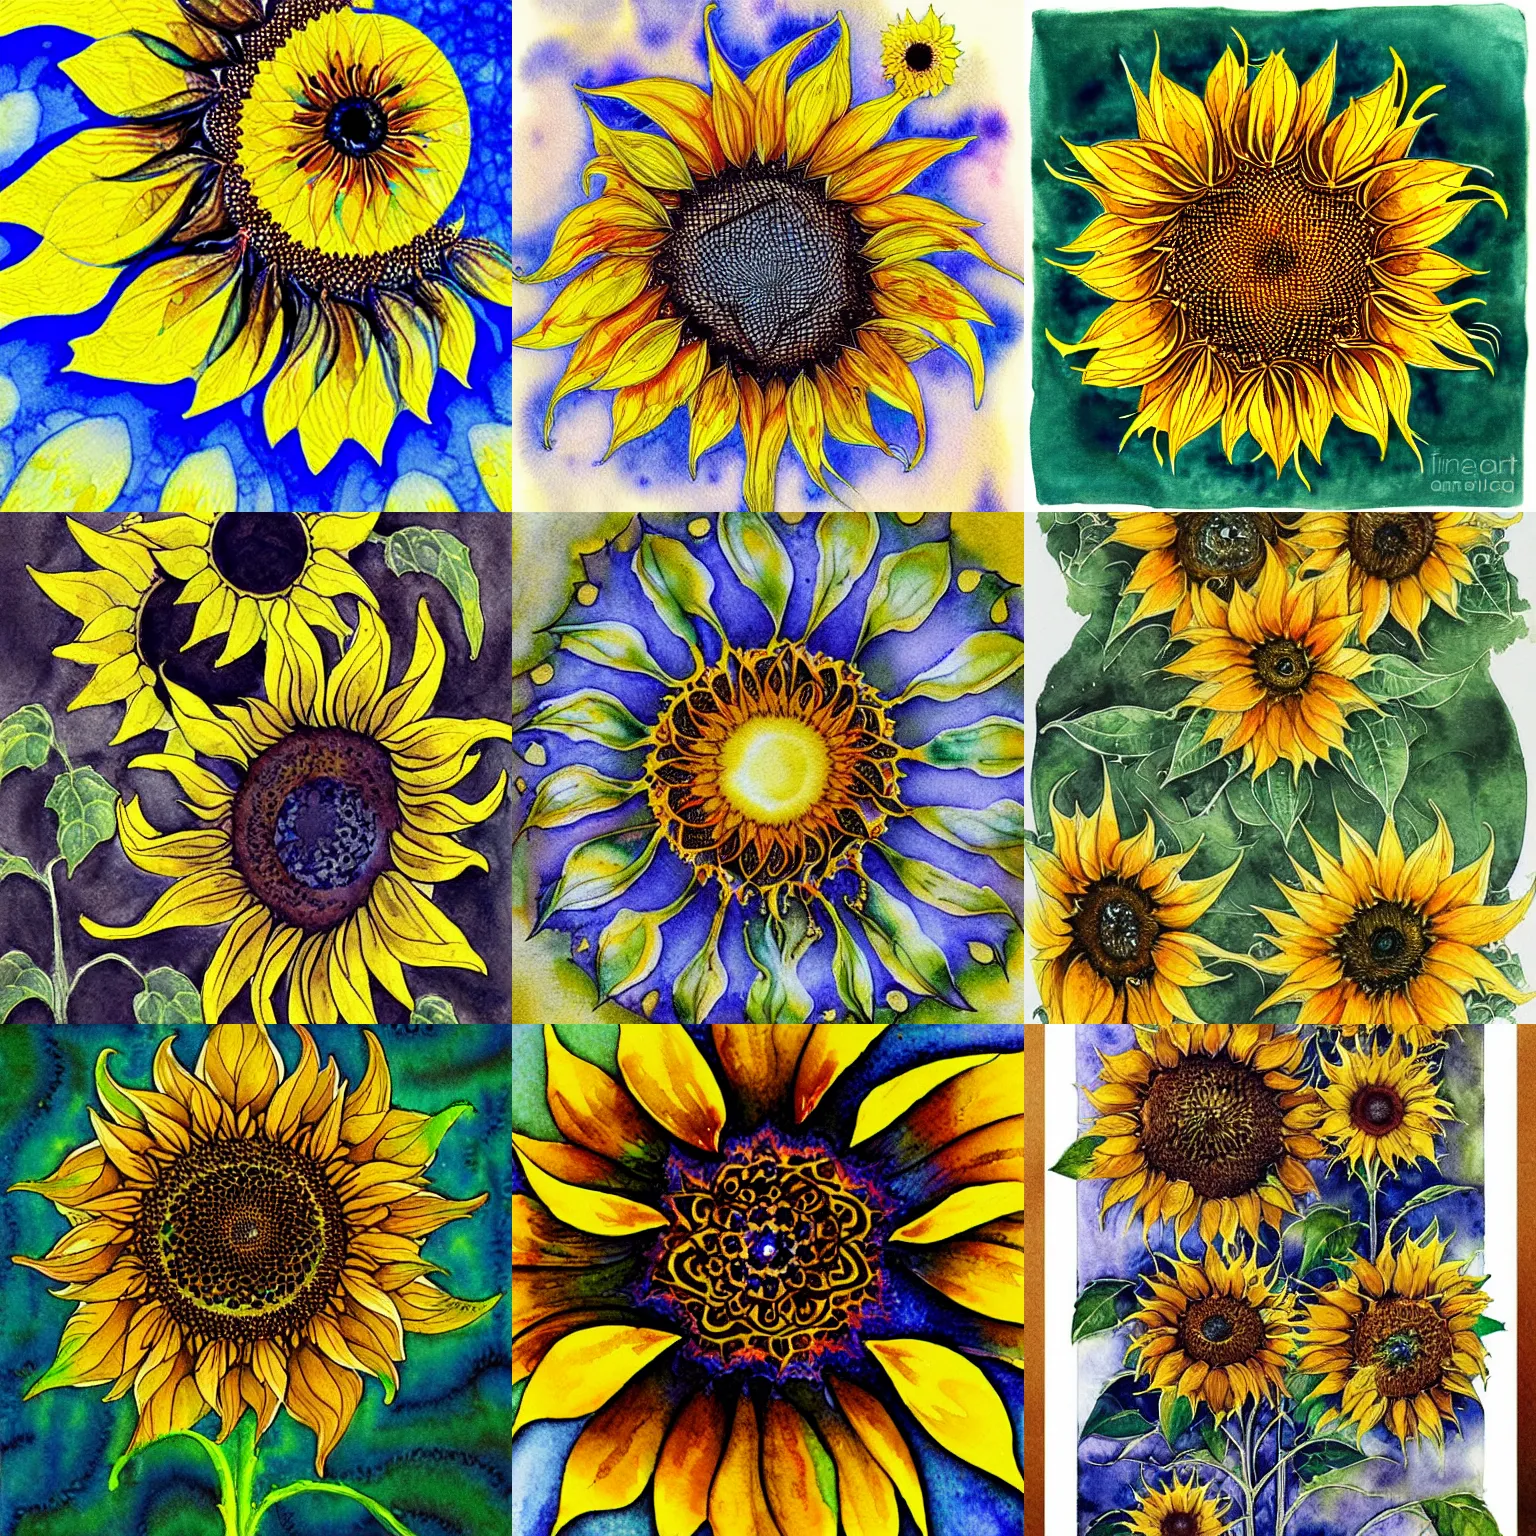 Prompt: sunflower fractal, intricate watercolor illustration by john singer sargent